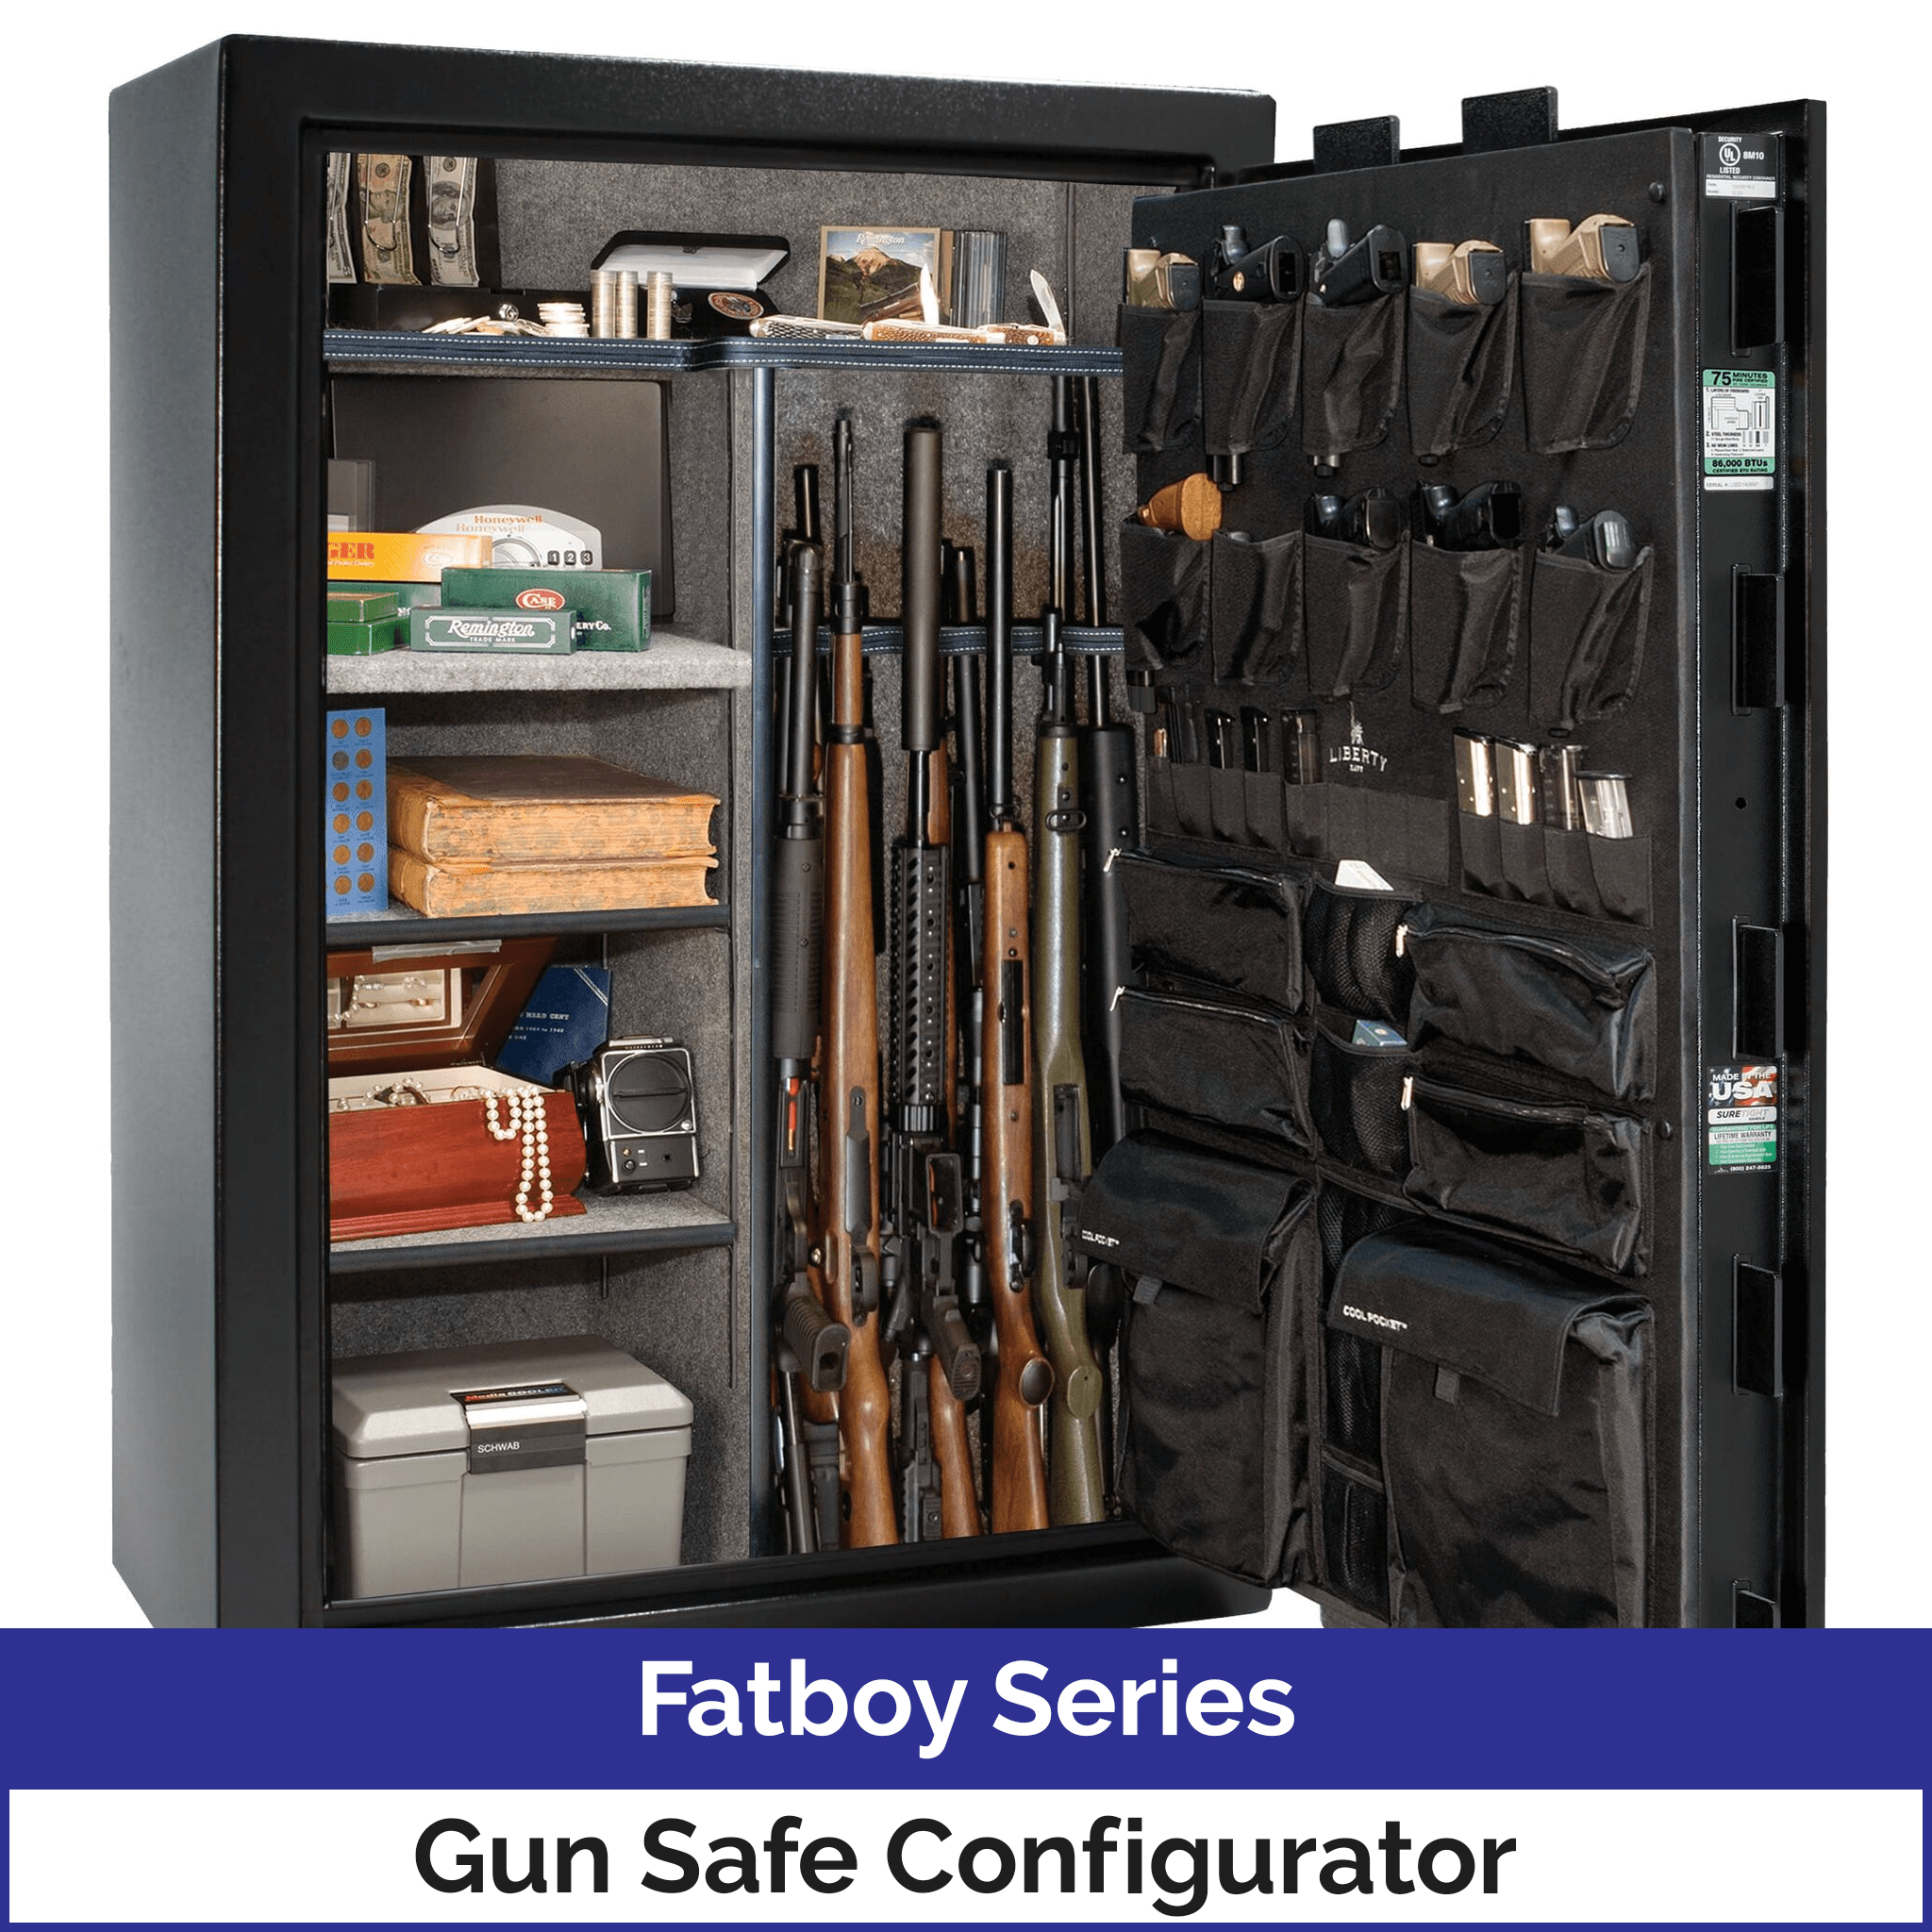 Liberty Fatboy Series Gun Safe Configurator, view 2